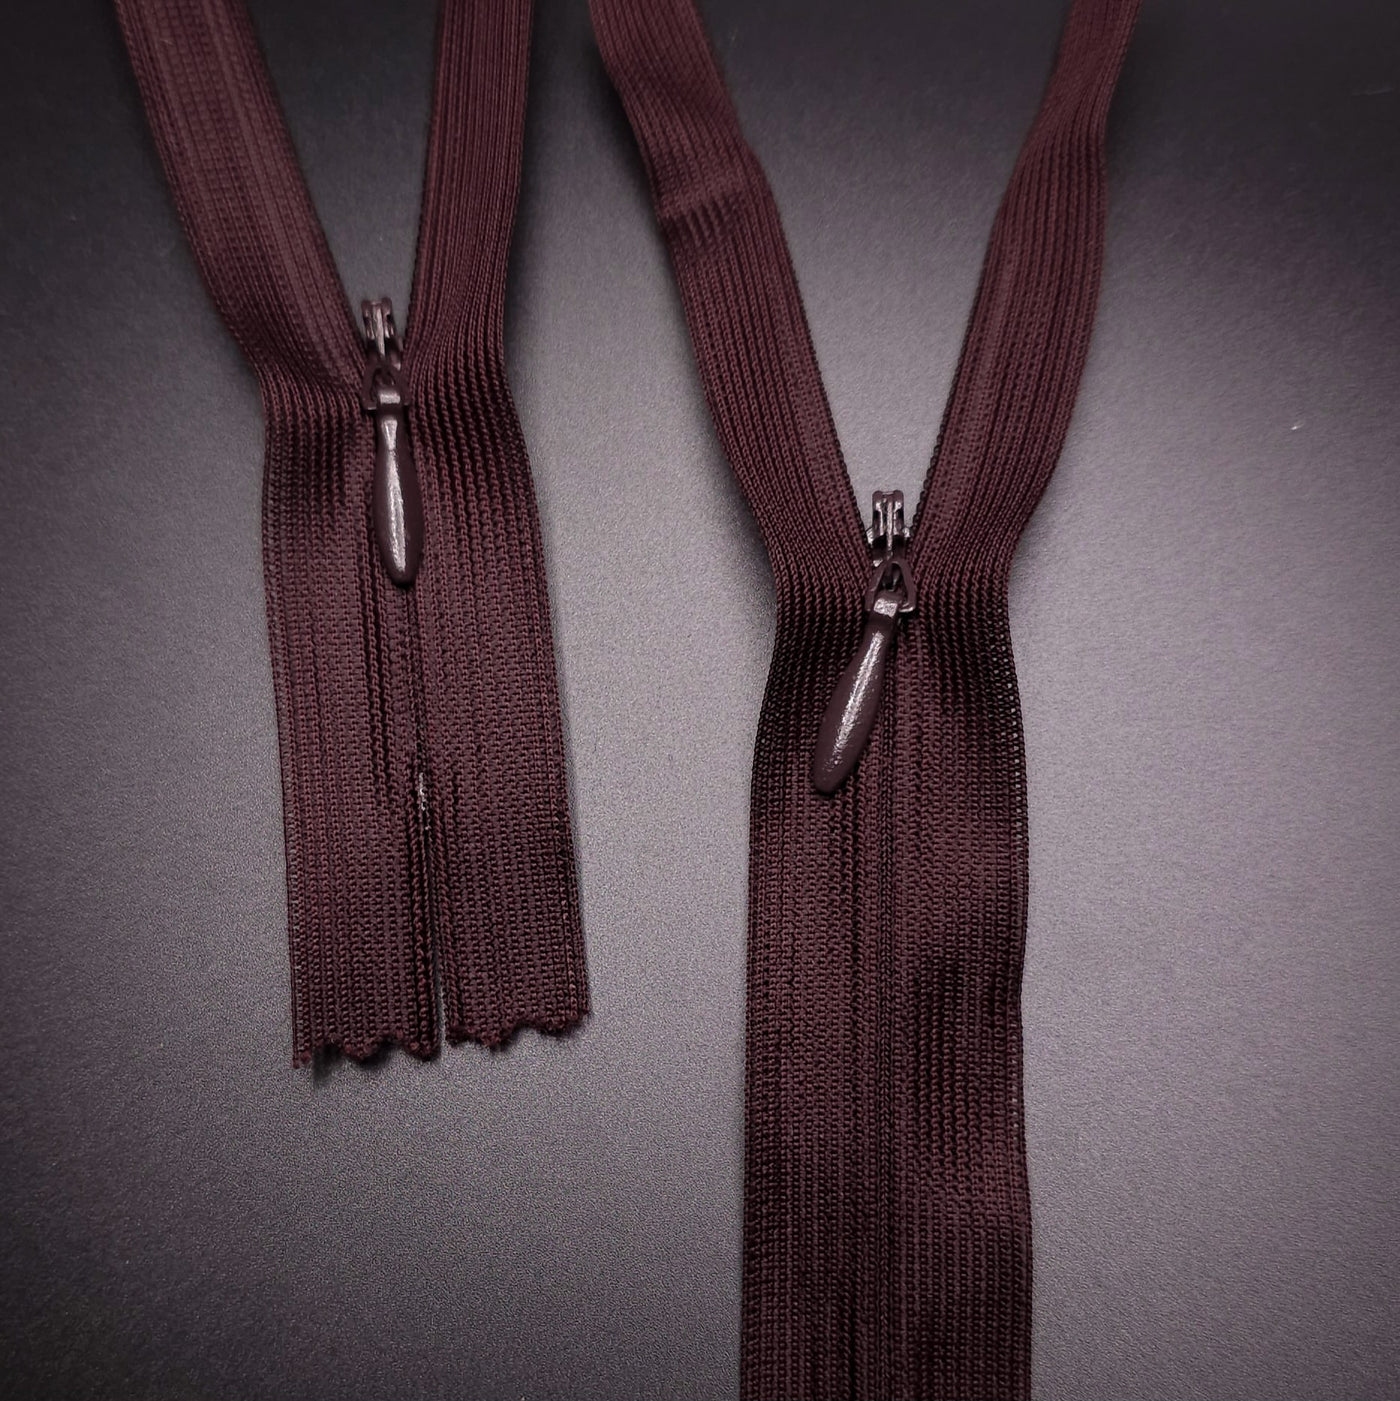 Closed End Invisible Zipper | #2 | 8.5" / 21.5 cm